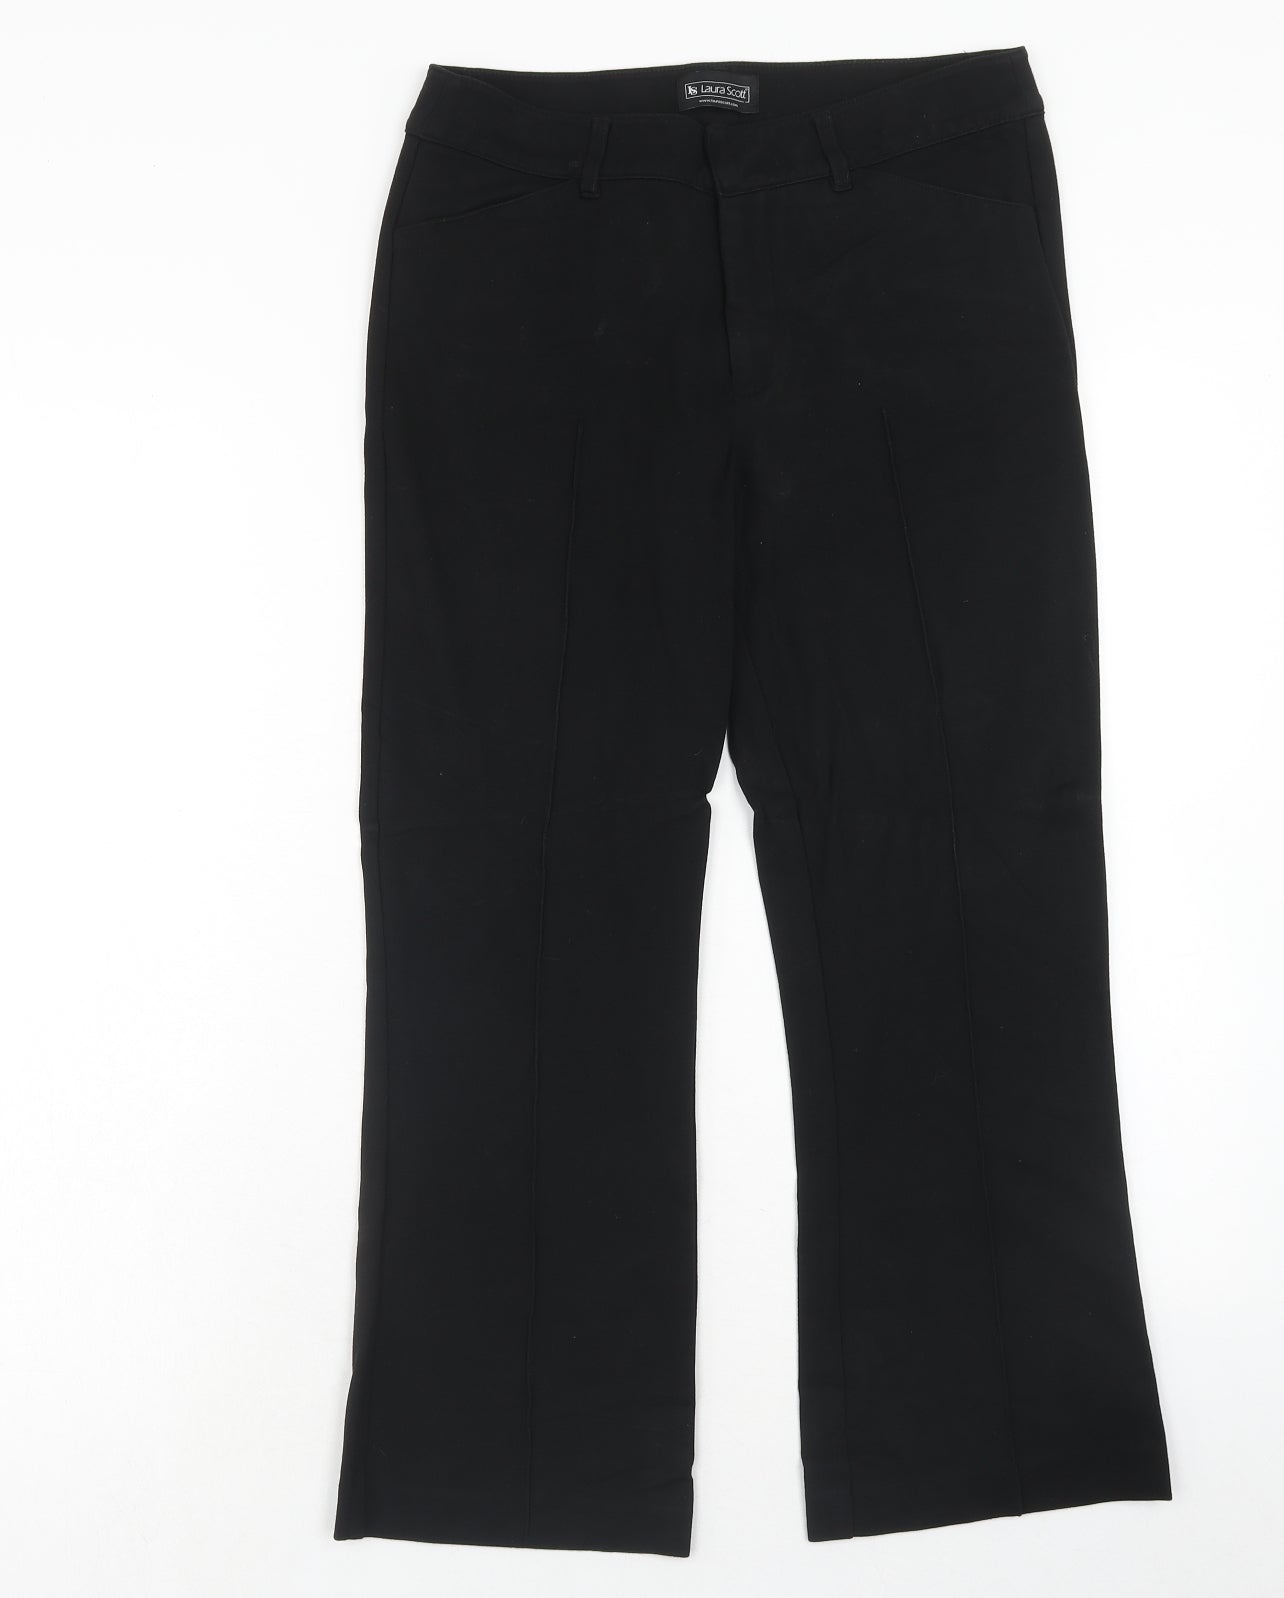 Laura Scott Womens Black Viscose Dress Pants Trousers Size 14 Regular Hook & Eye